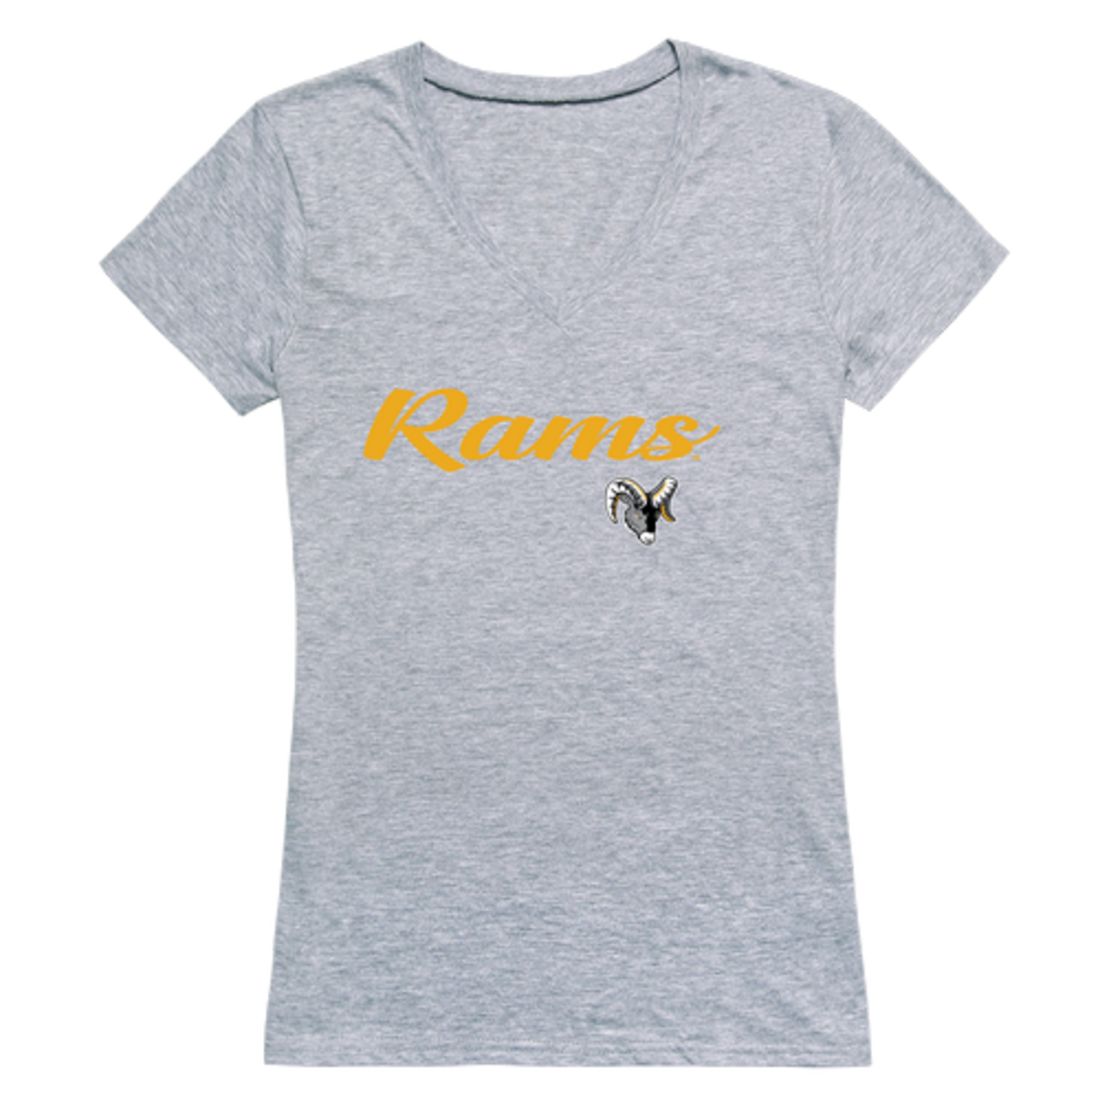 Framingham State University Rams Womens Script T-Shirt Tee